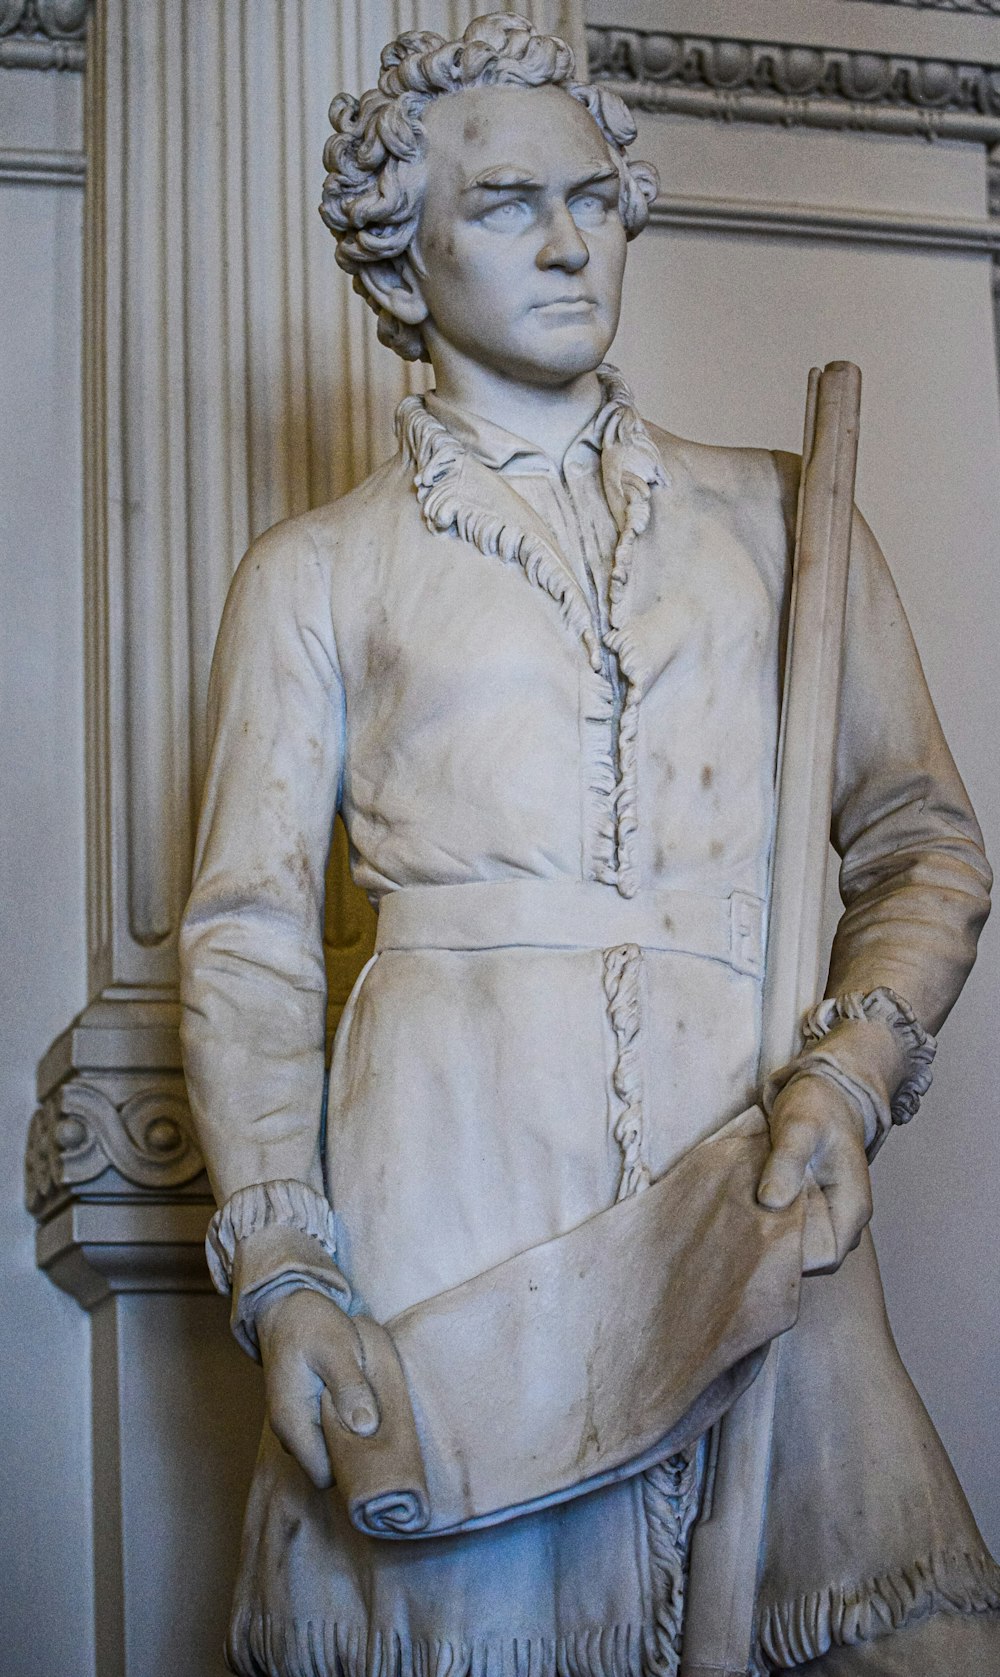 a statue of a person